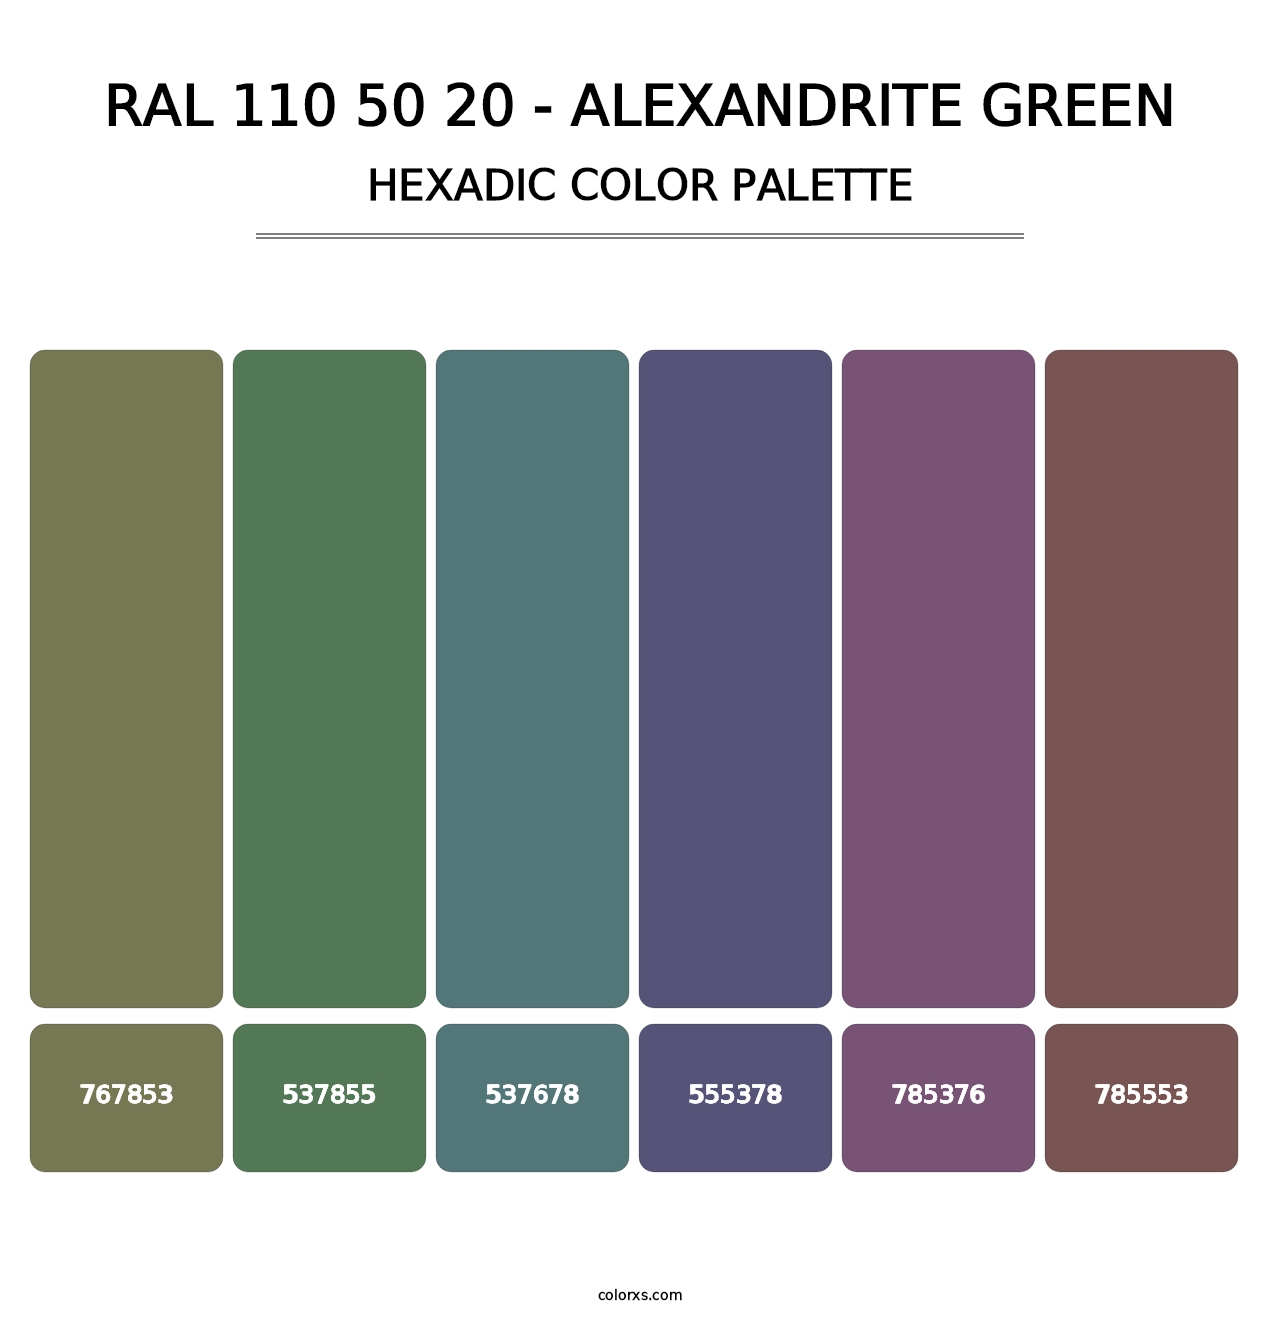 RAL 110 50 20 - Alexandrite Green - Hexadic Color Palette